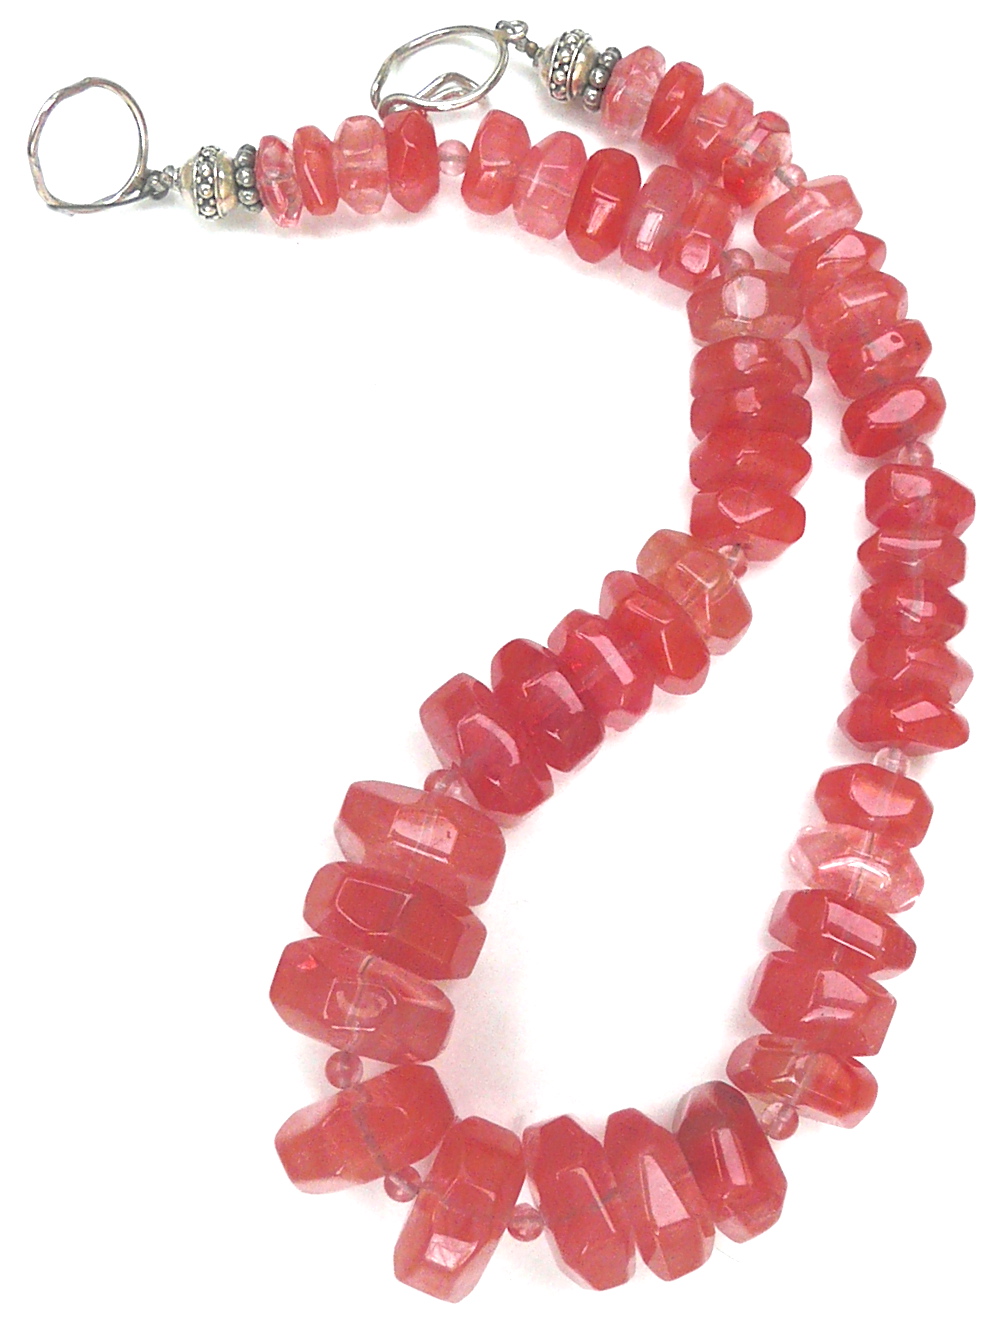 C2461 Strawberry quartz necklace